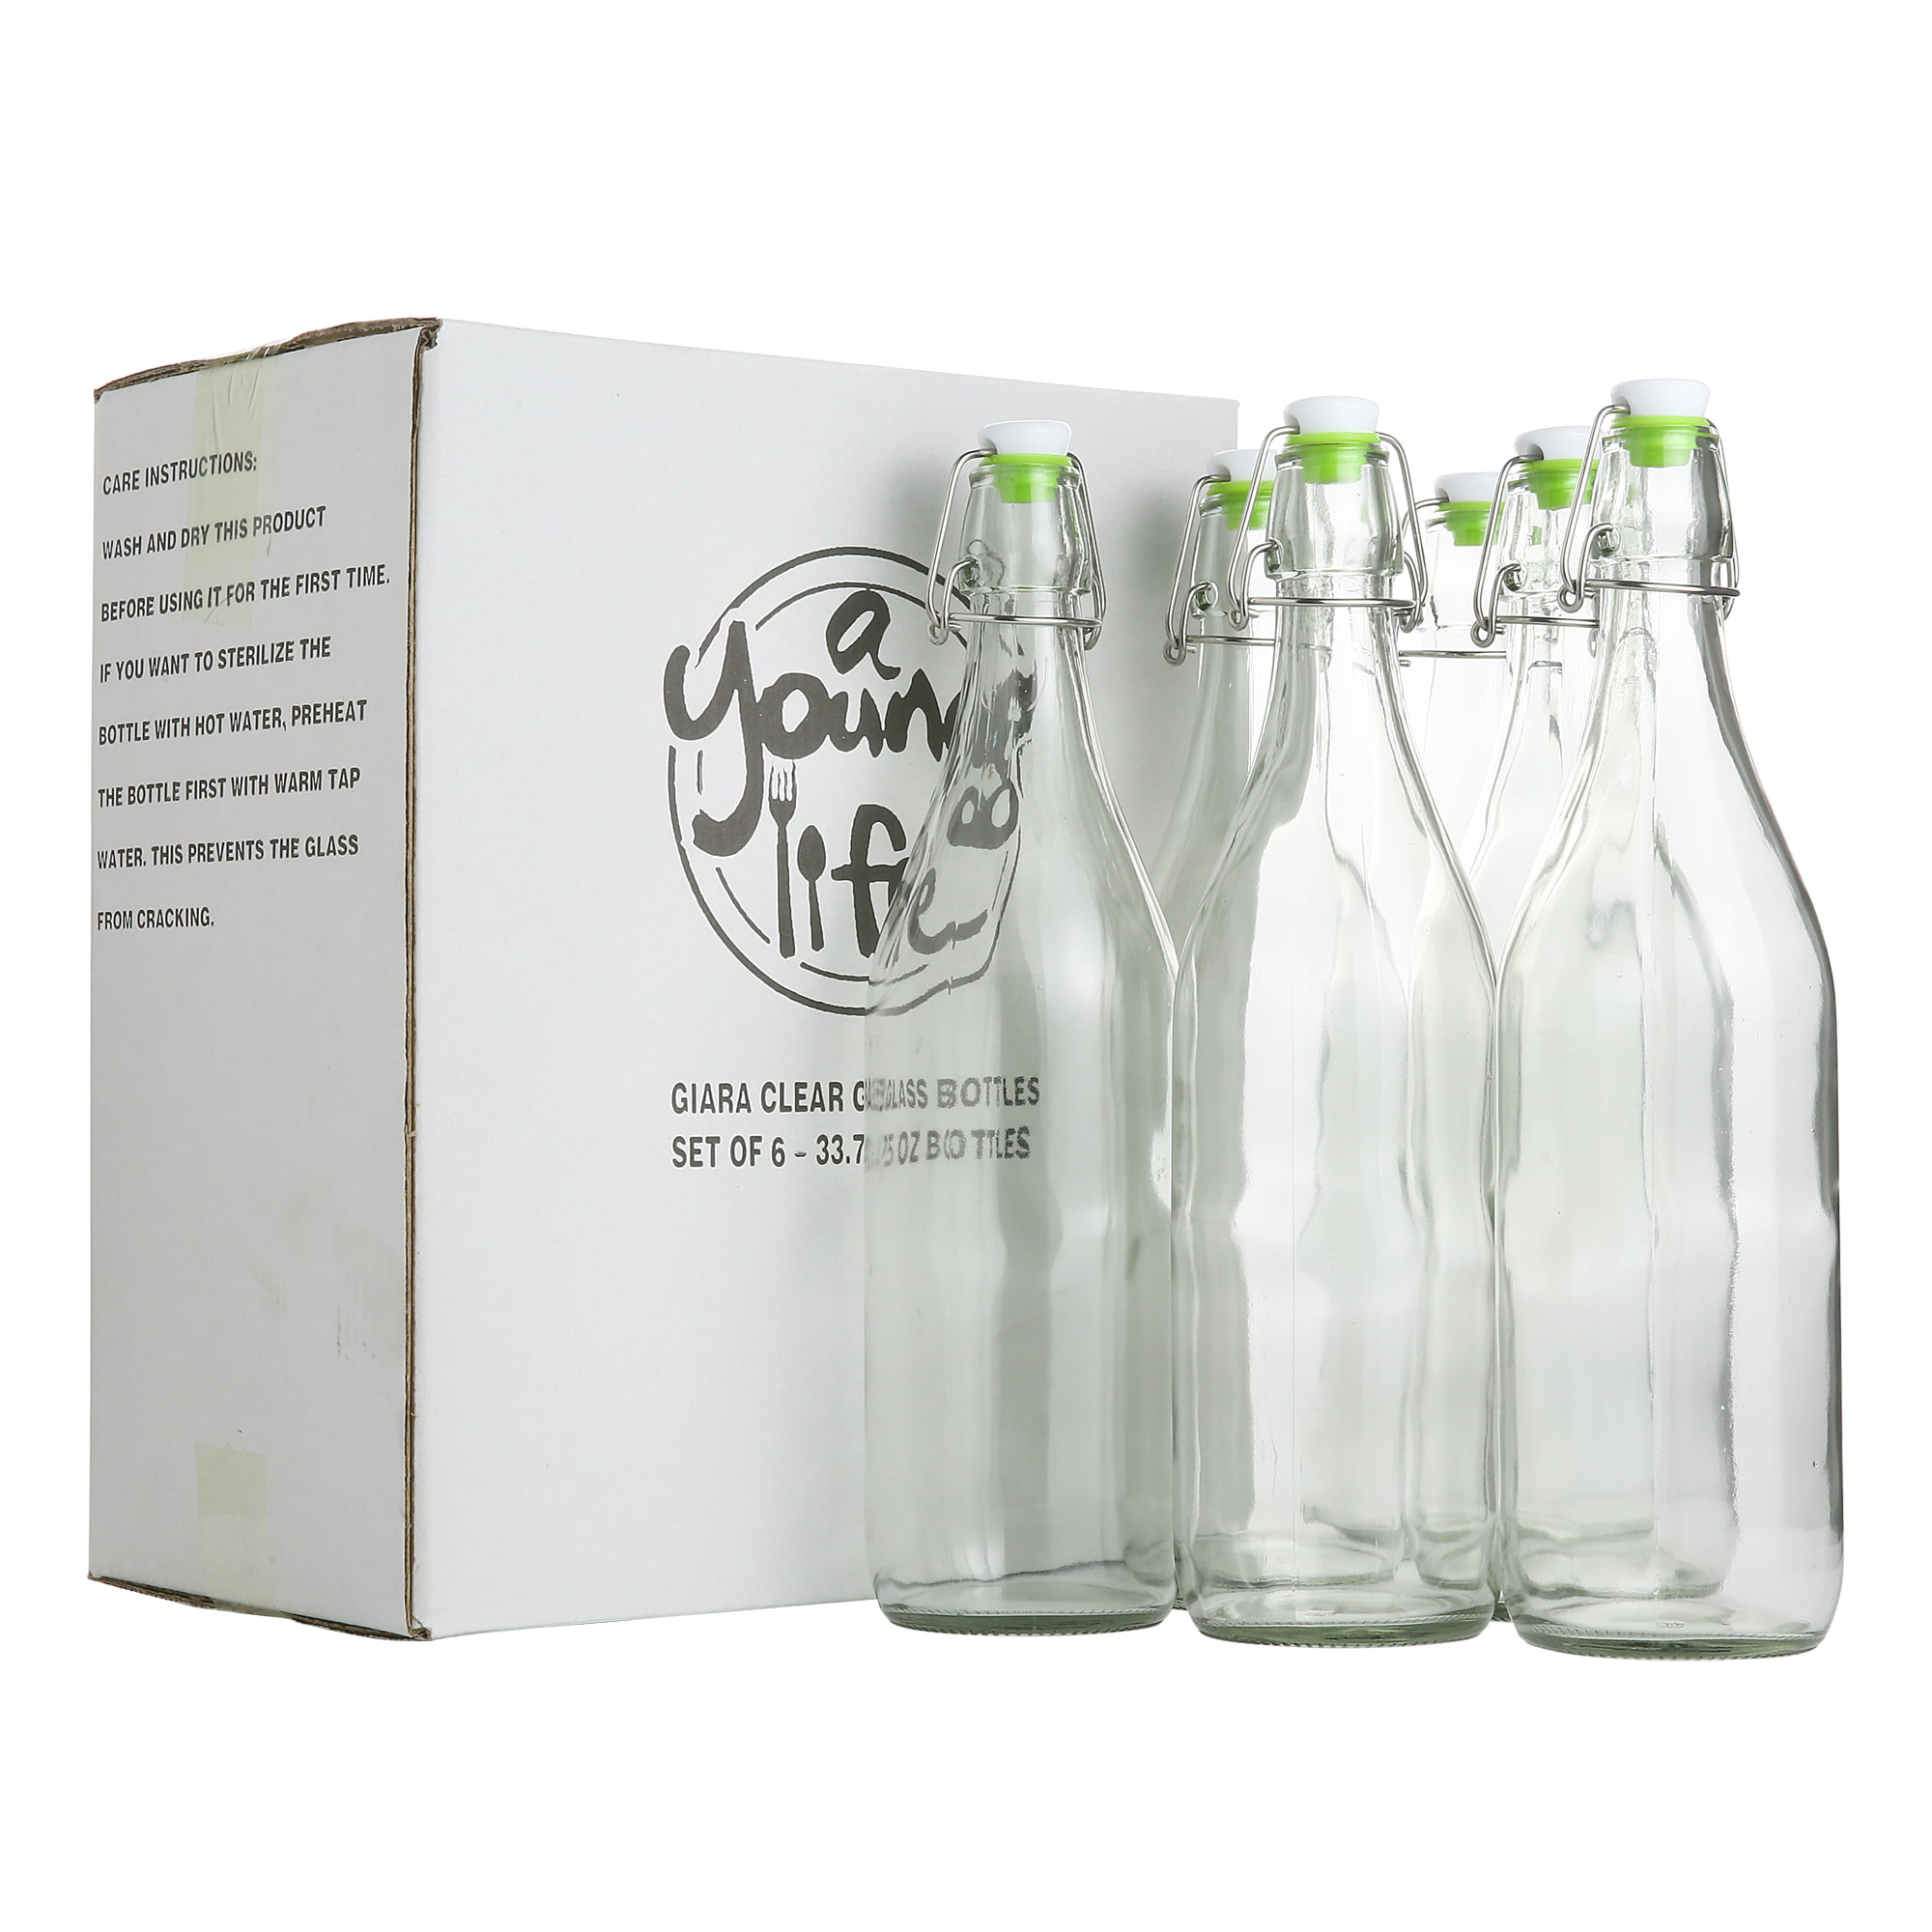 AOZITA 8-Pack 1 Liter Swing Top Glass Bottles w/Airtight Stopper Lids –  33oz Flip Top Brewing Bottle…See more AOZITA 8-Pack 1 Liter Swing Top Glass